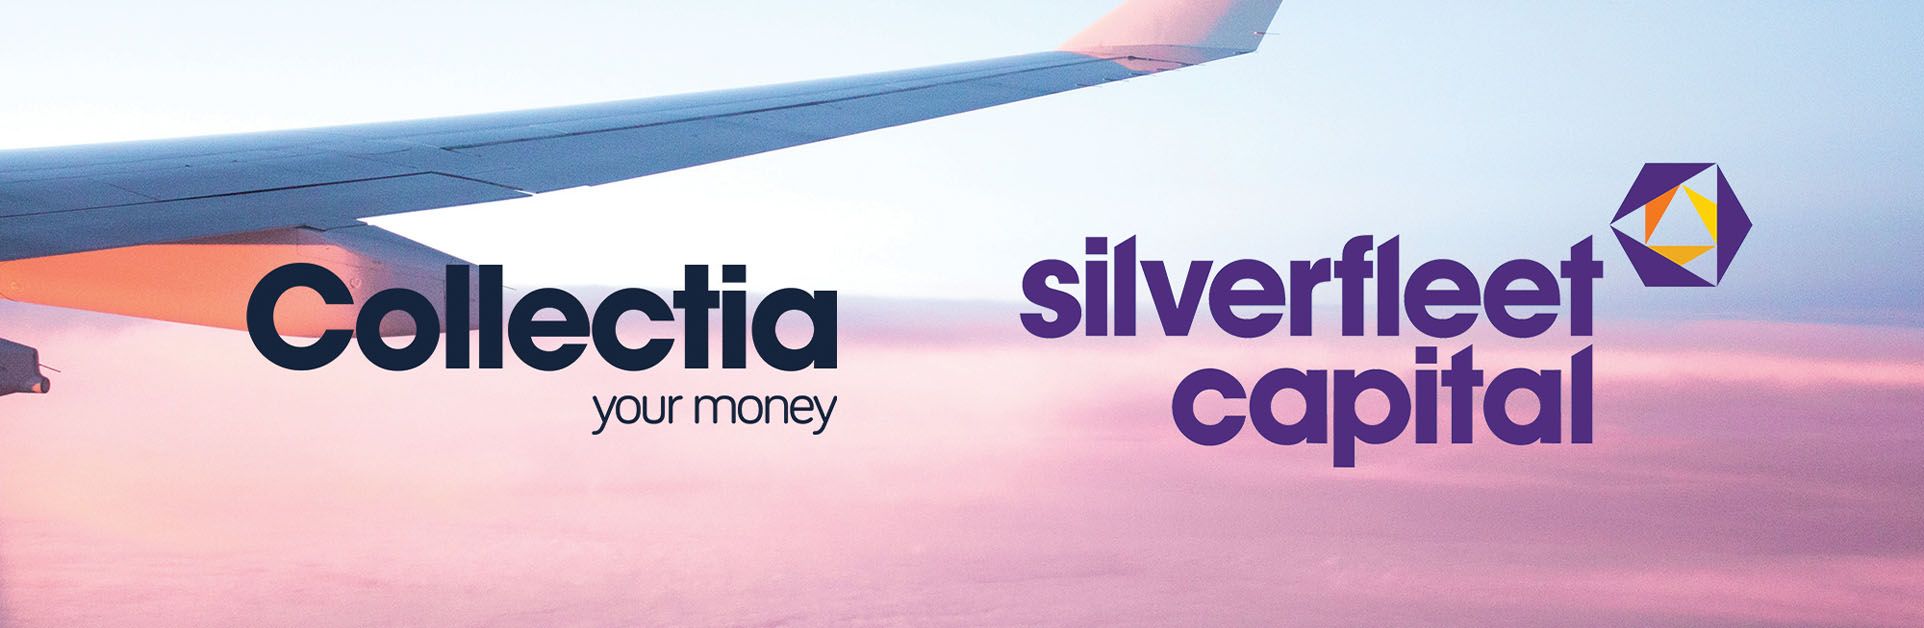 En stor milepæl er nået - Collectia & Silverfleet Capital - Opkøb